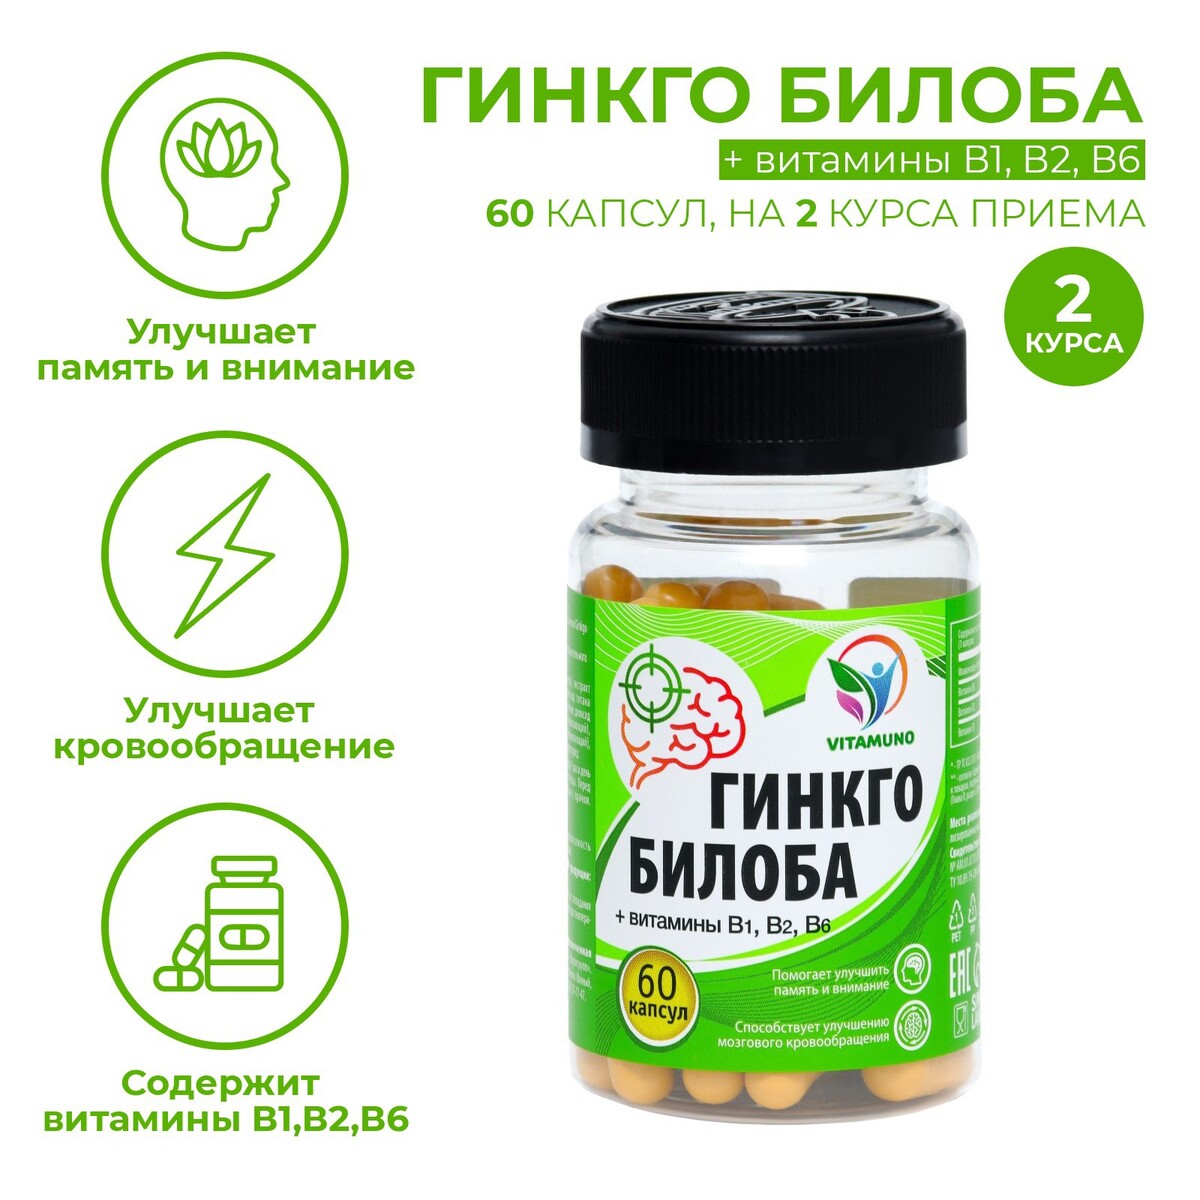 Гинкго билоба ангио, 60 капсул по 500 мг Vitamuno 08129612 - фото 1